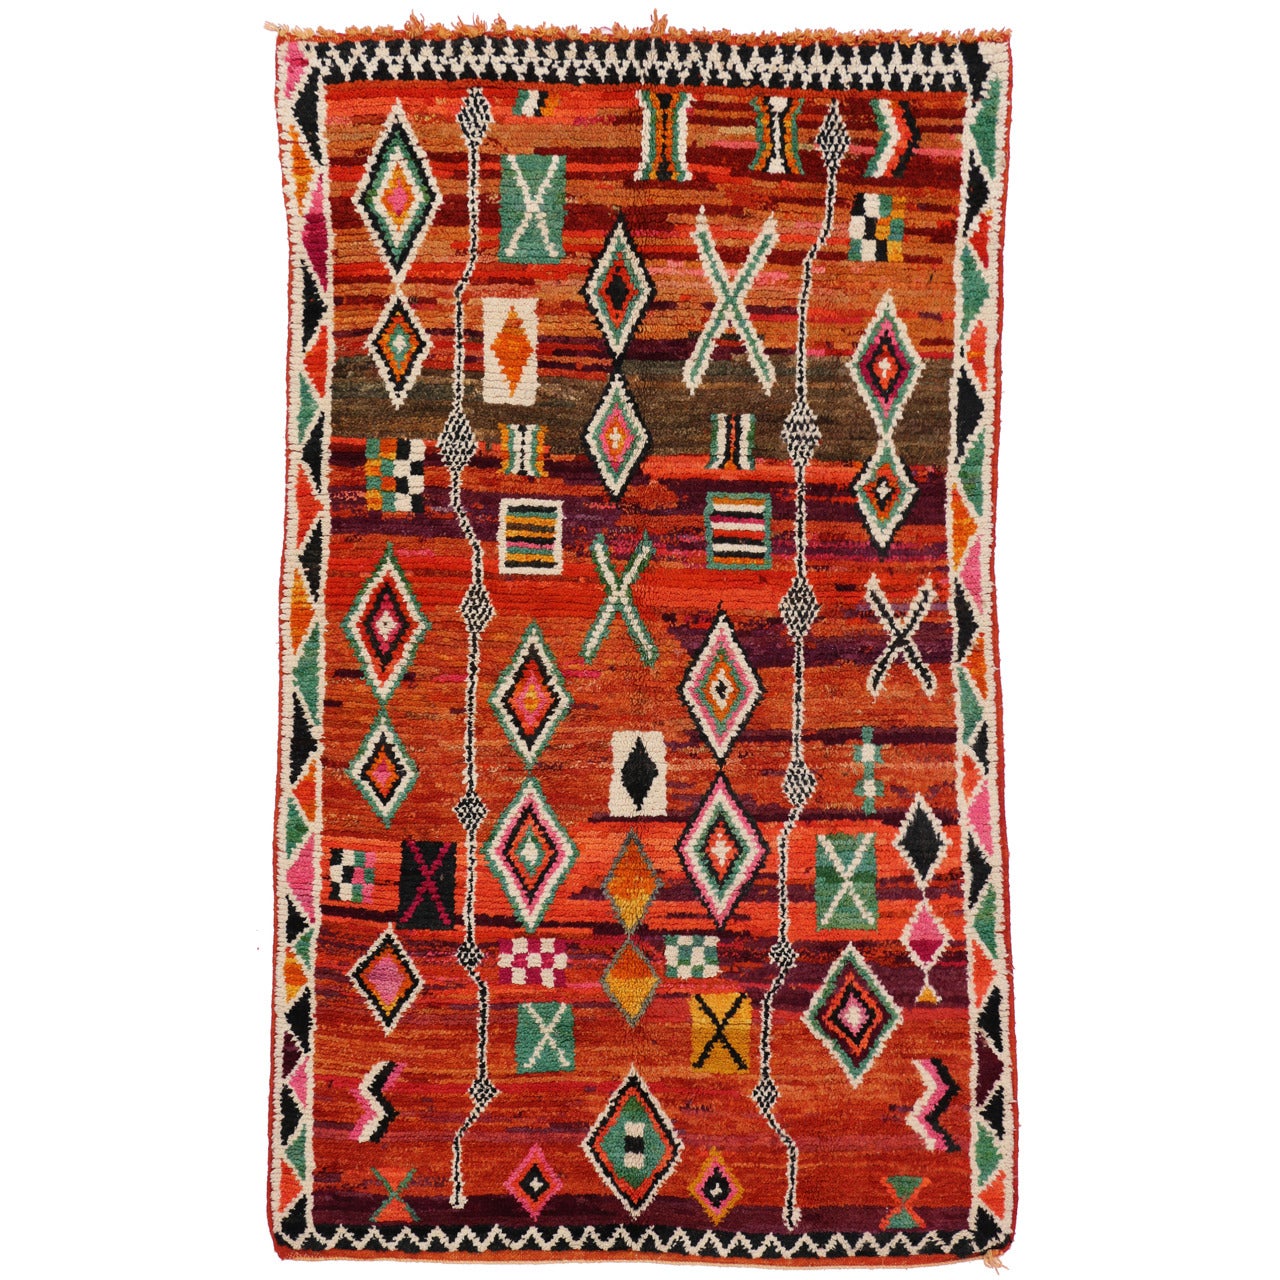 Vintage Moroccan Rug with Geometric Print, Tribal Style Berber Moroccan Area Rug